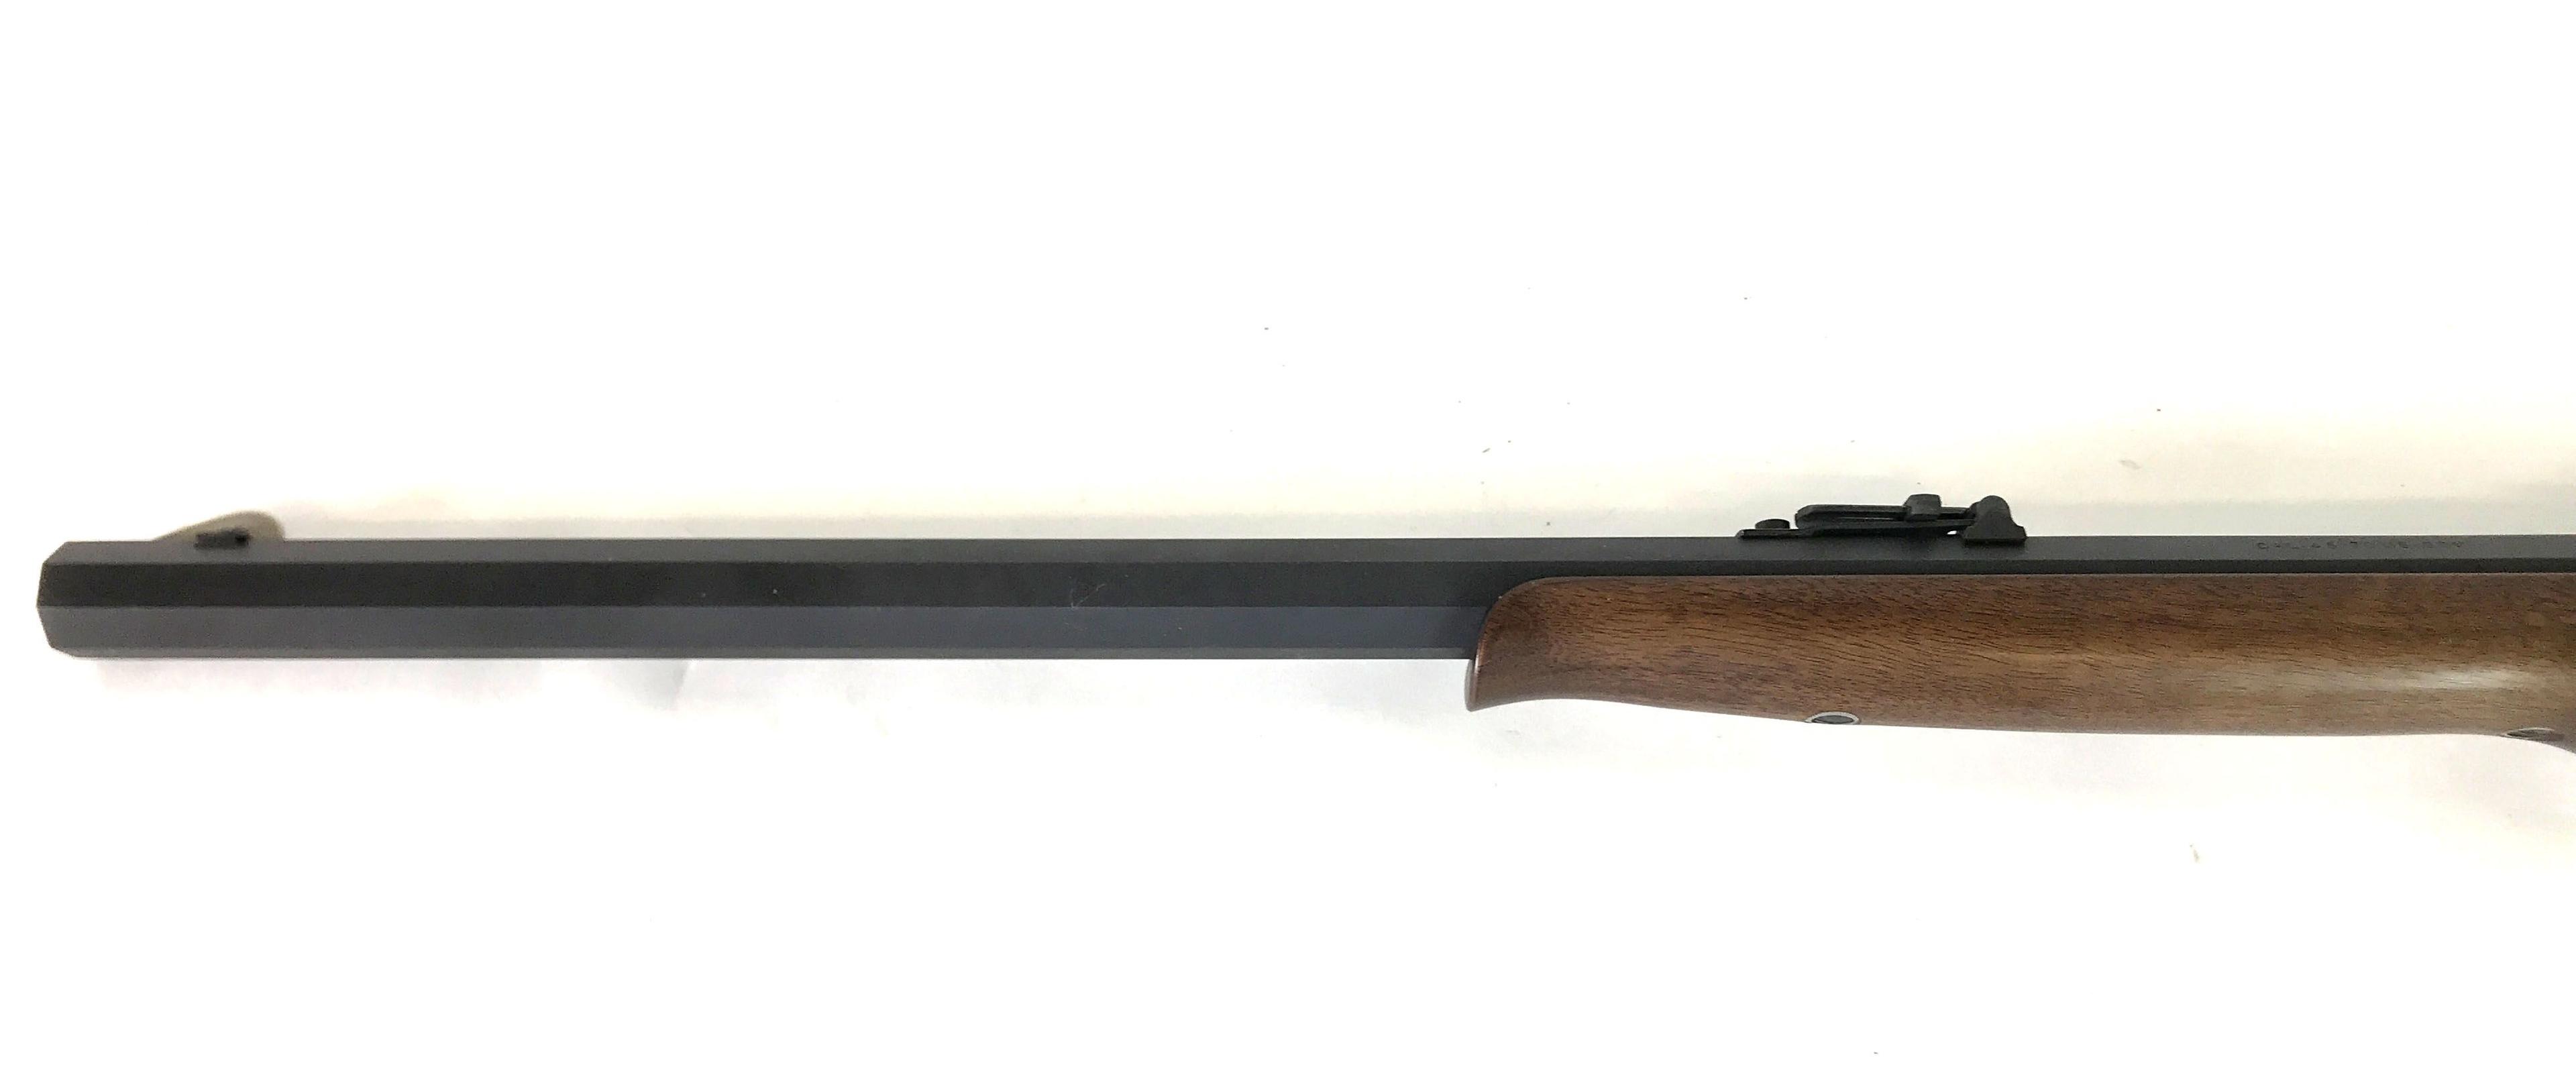 EMF Sharps Reproduction Carbine Rifle Firearm